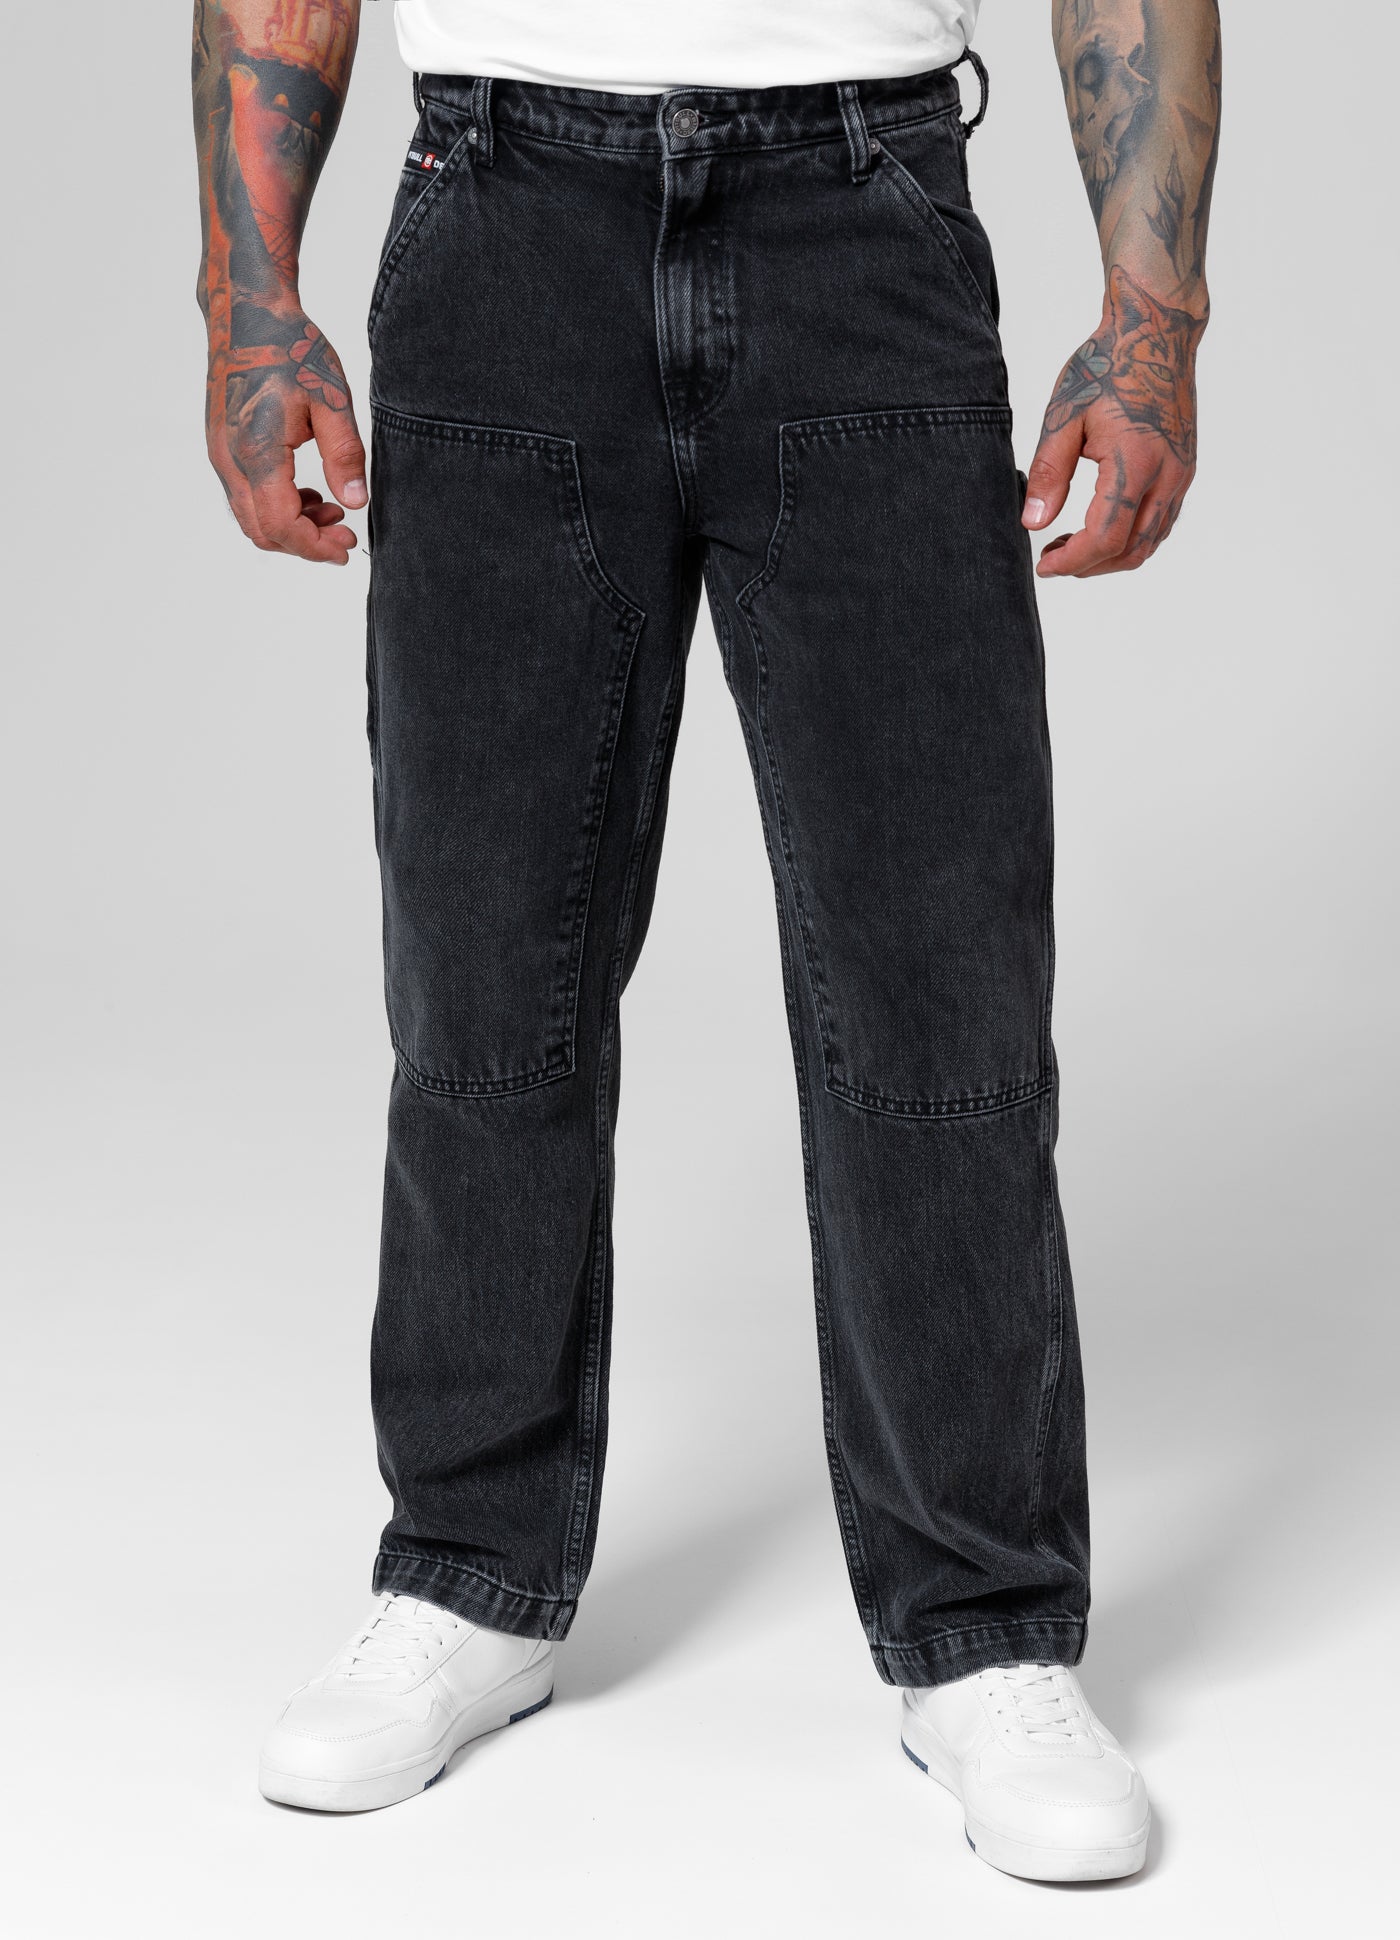 CARPENTER Black Denim Jeans